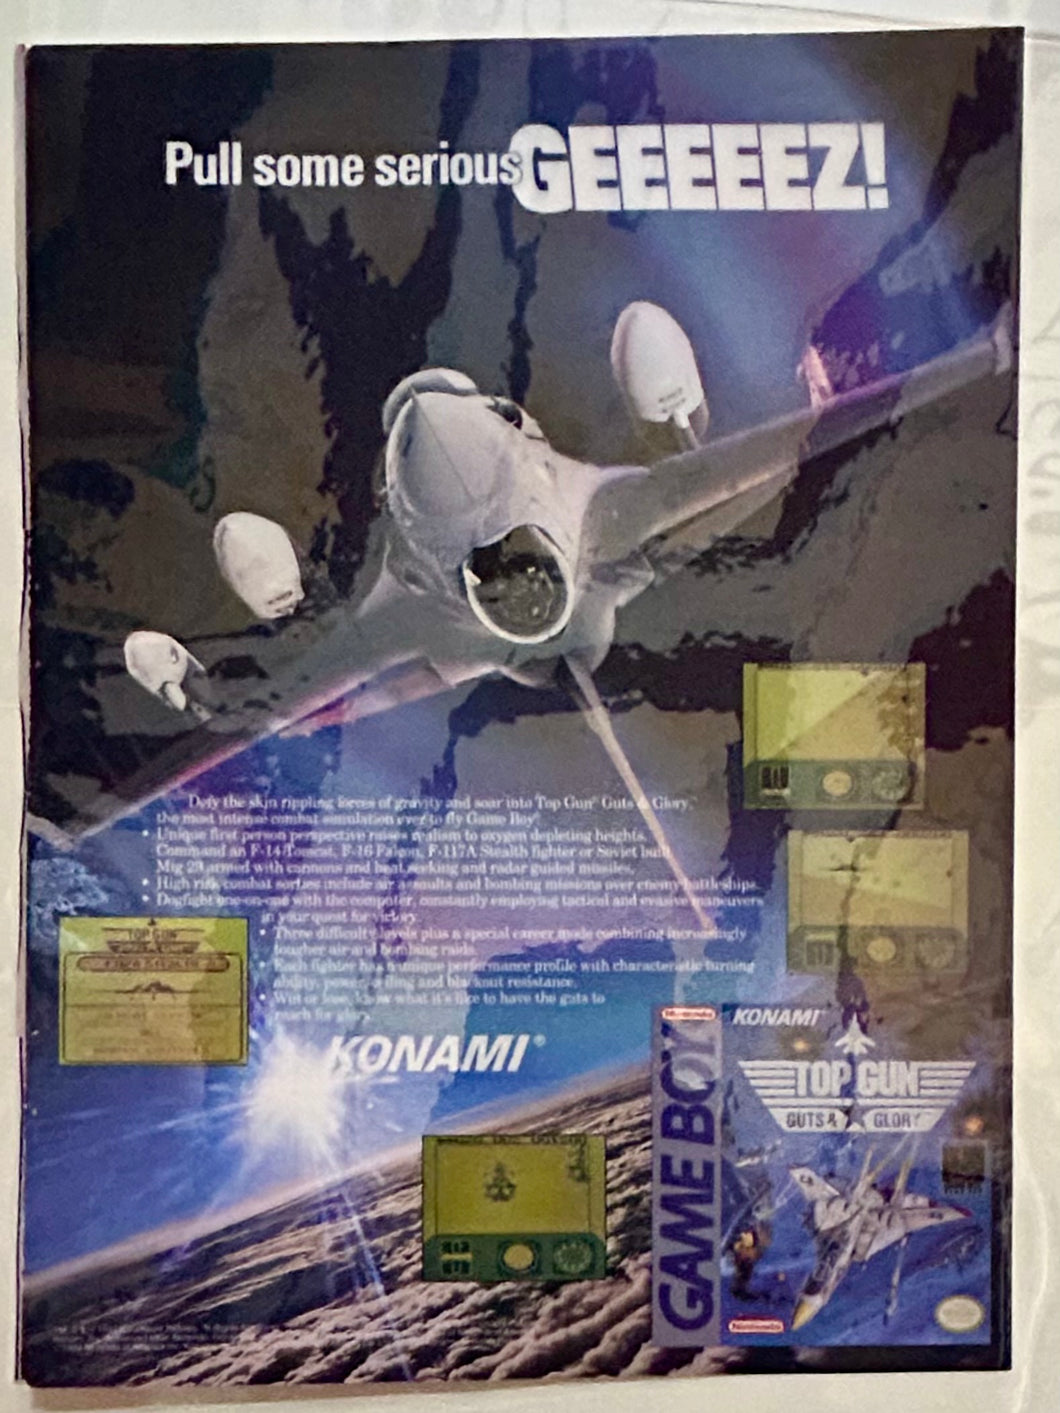 Top Gun: Guts and Glory - GameBoy - Original Vintage Advertisement - Print Ads - Laminated A4 Poster